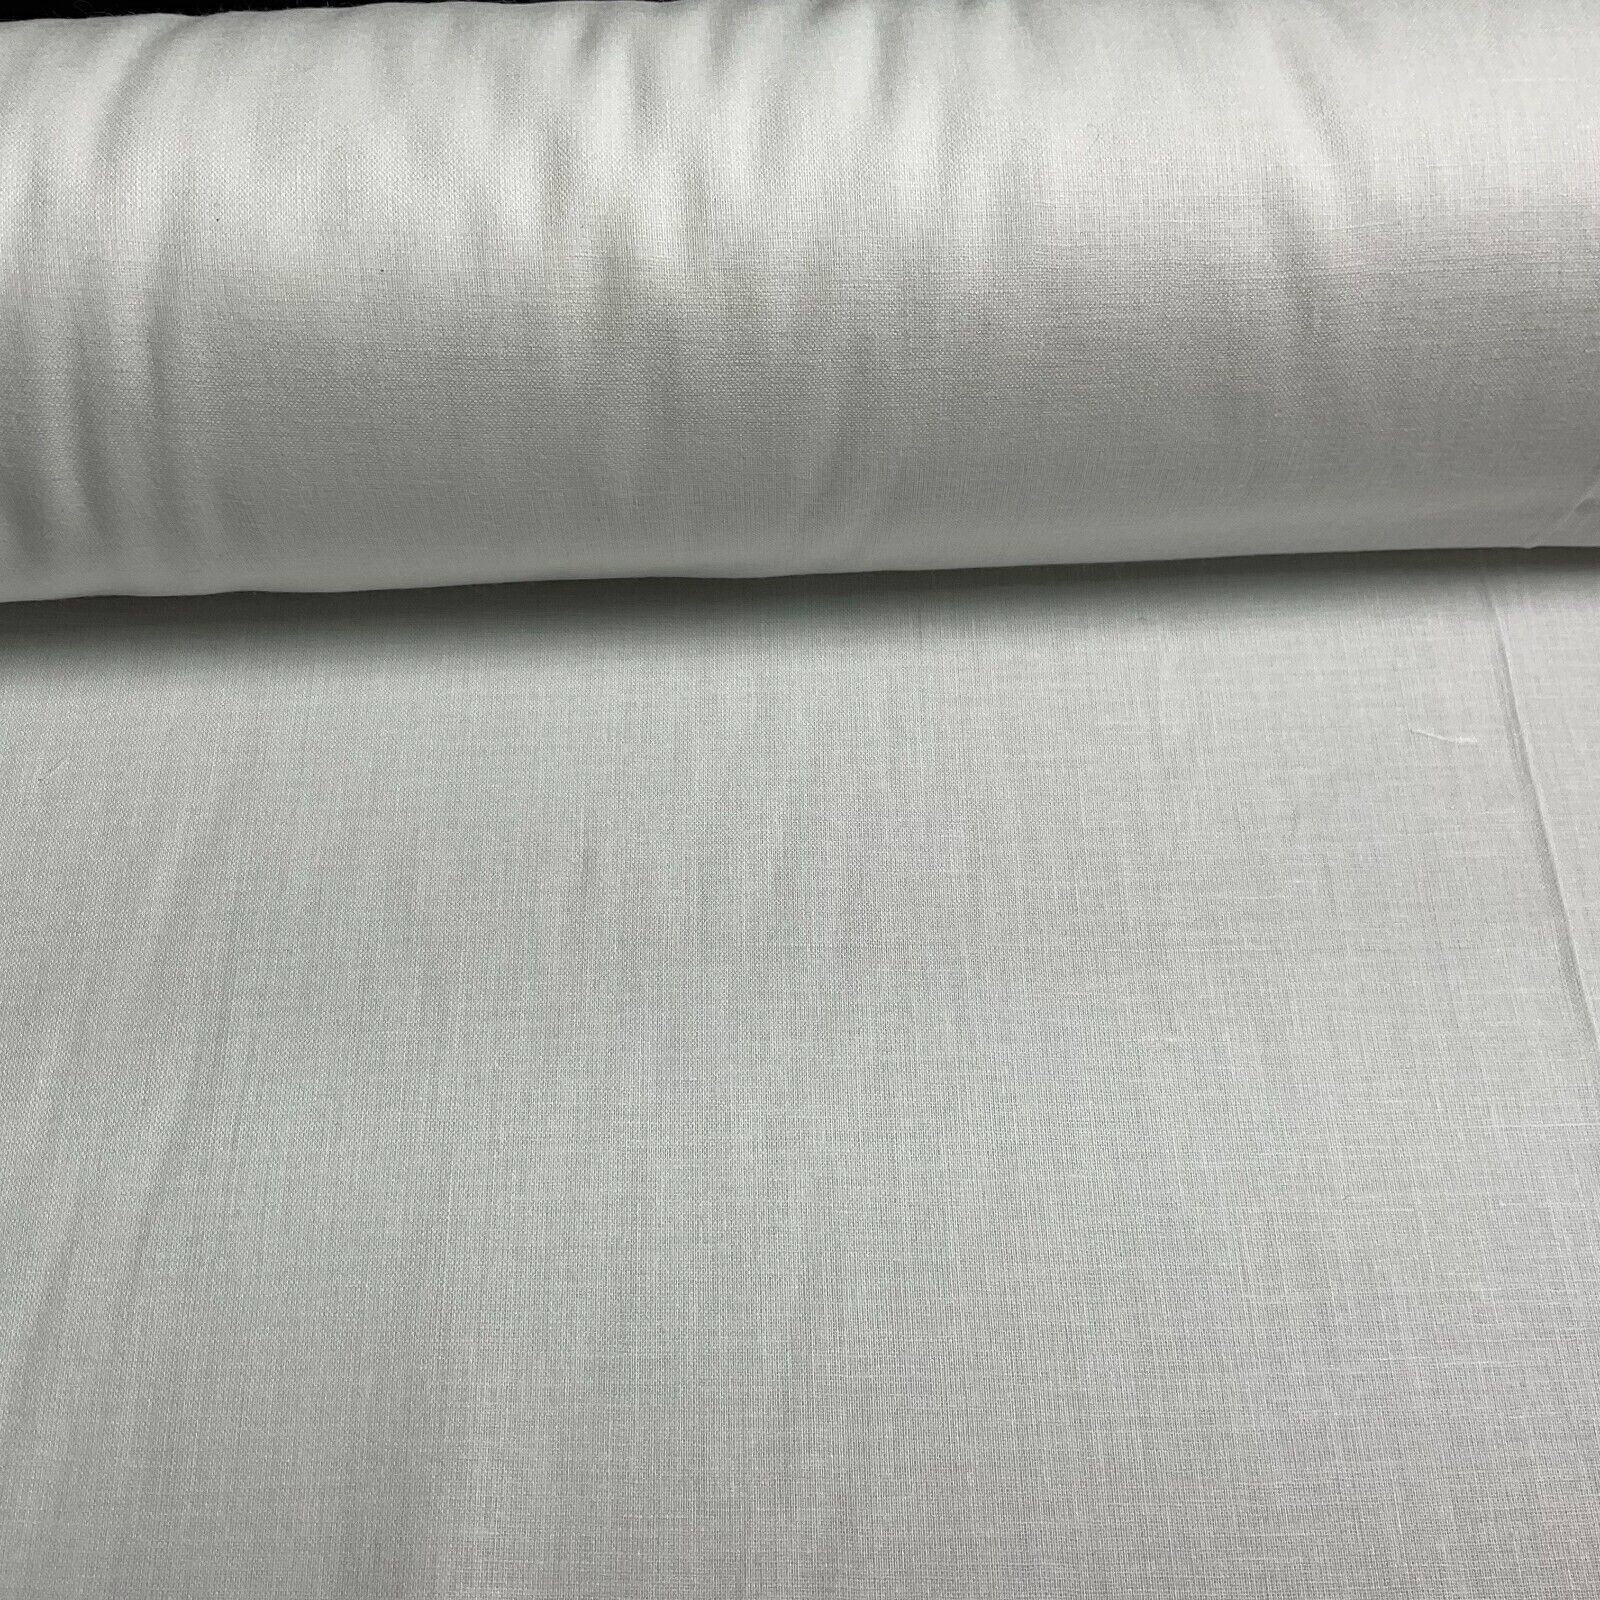 Plain Superfine cotton voile lightweight sewing lining dressmaking fabric M1553